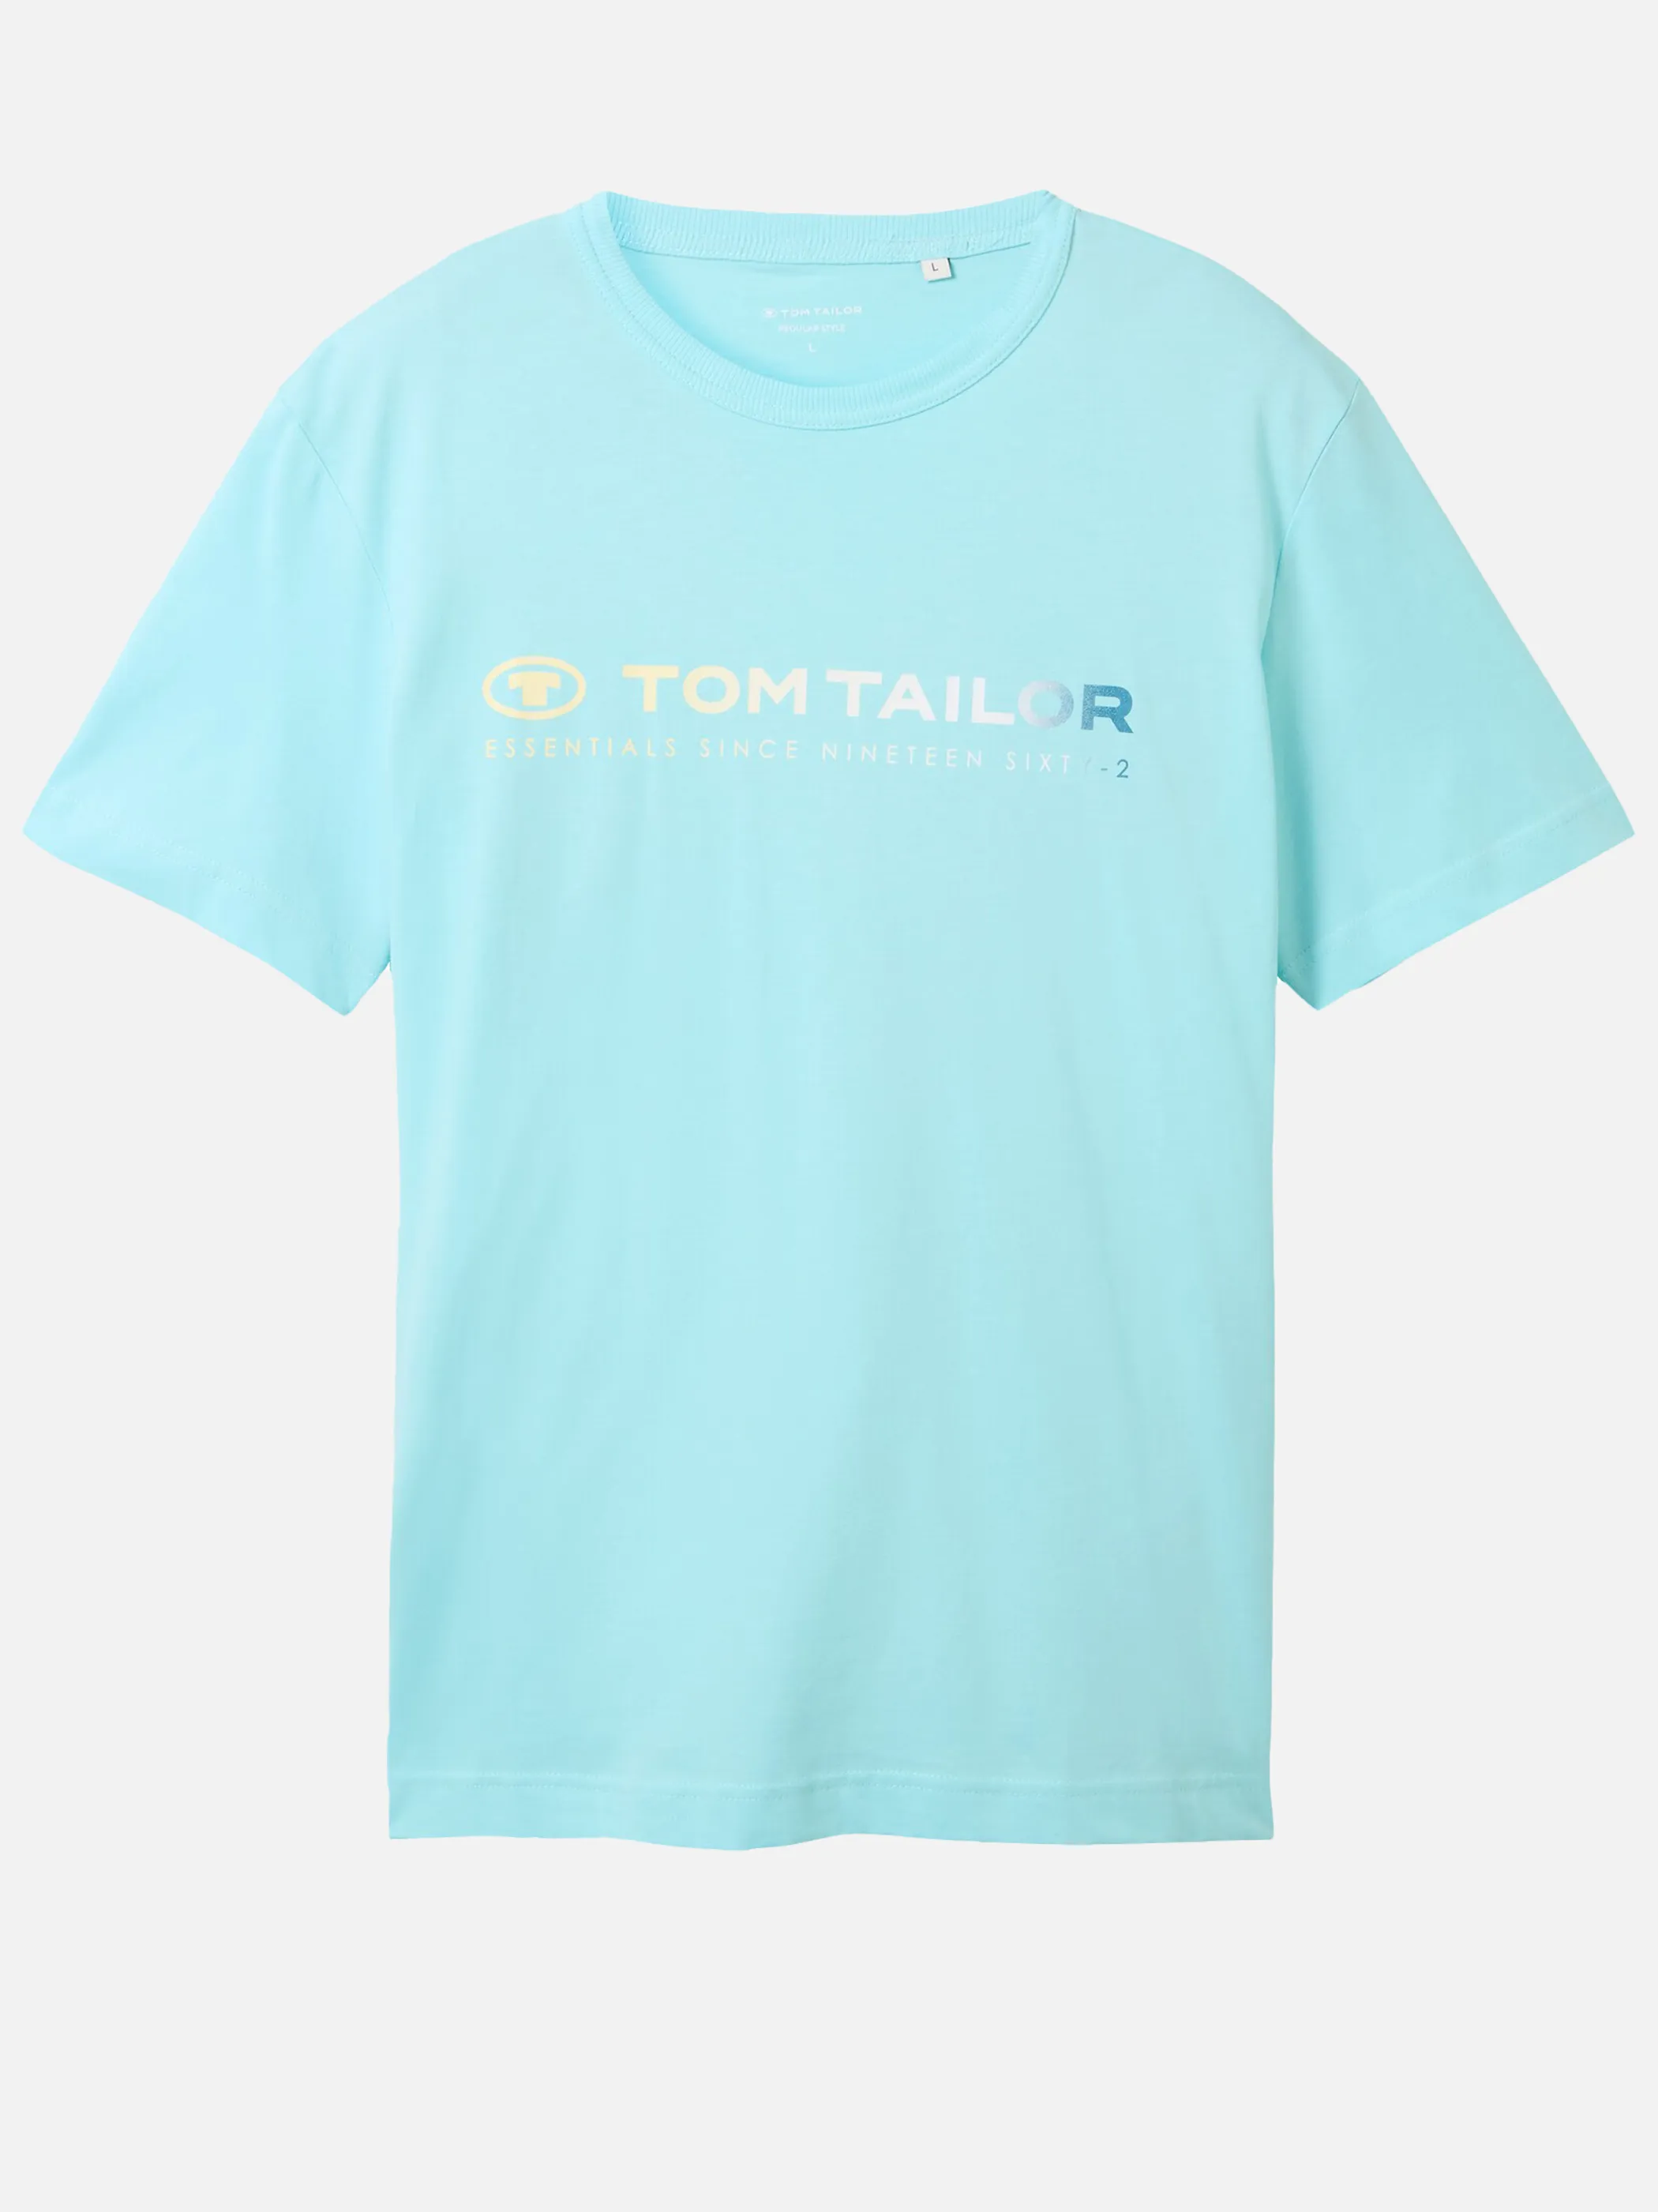 Tom Tailor 1041855 printed t-shirt Türkis 895629 34921 1